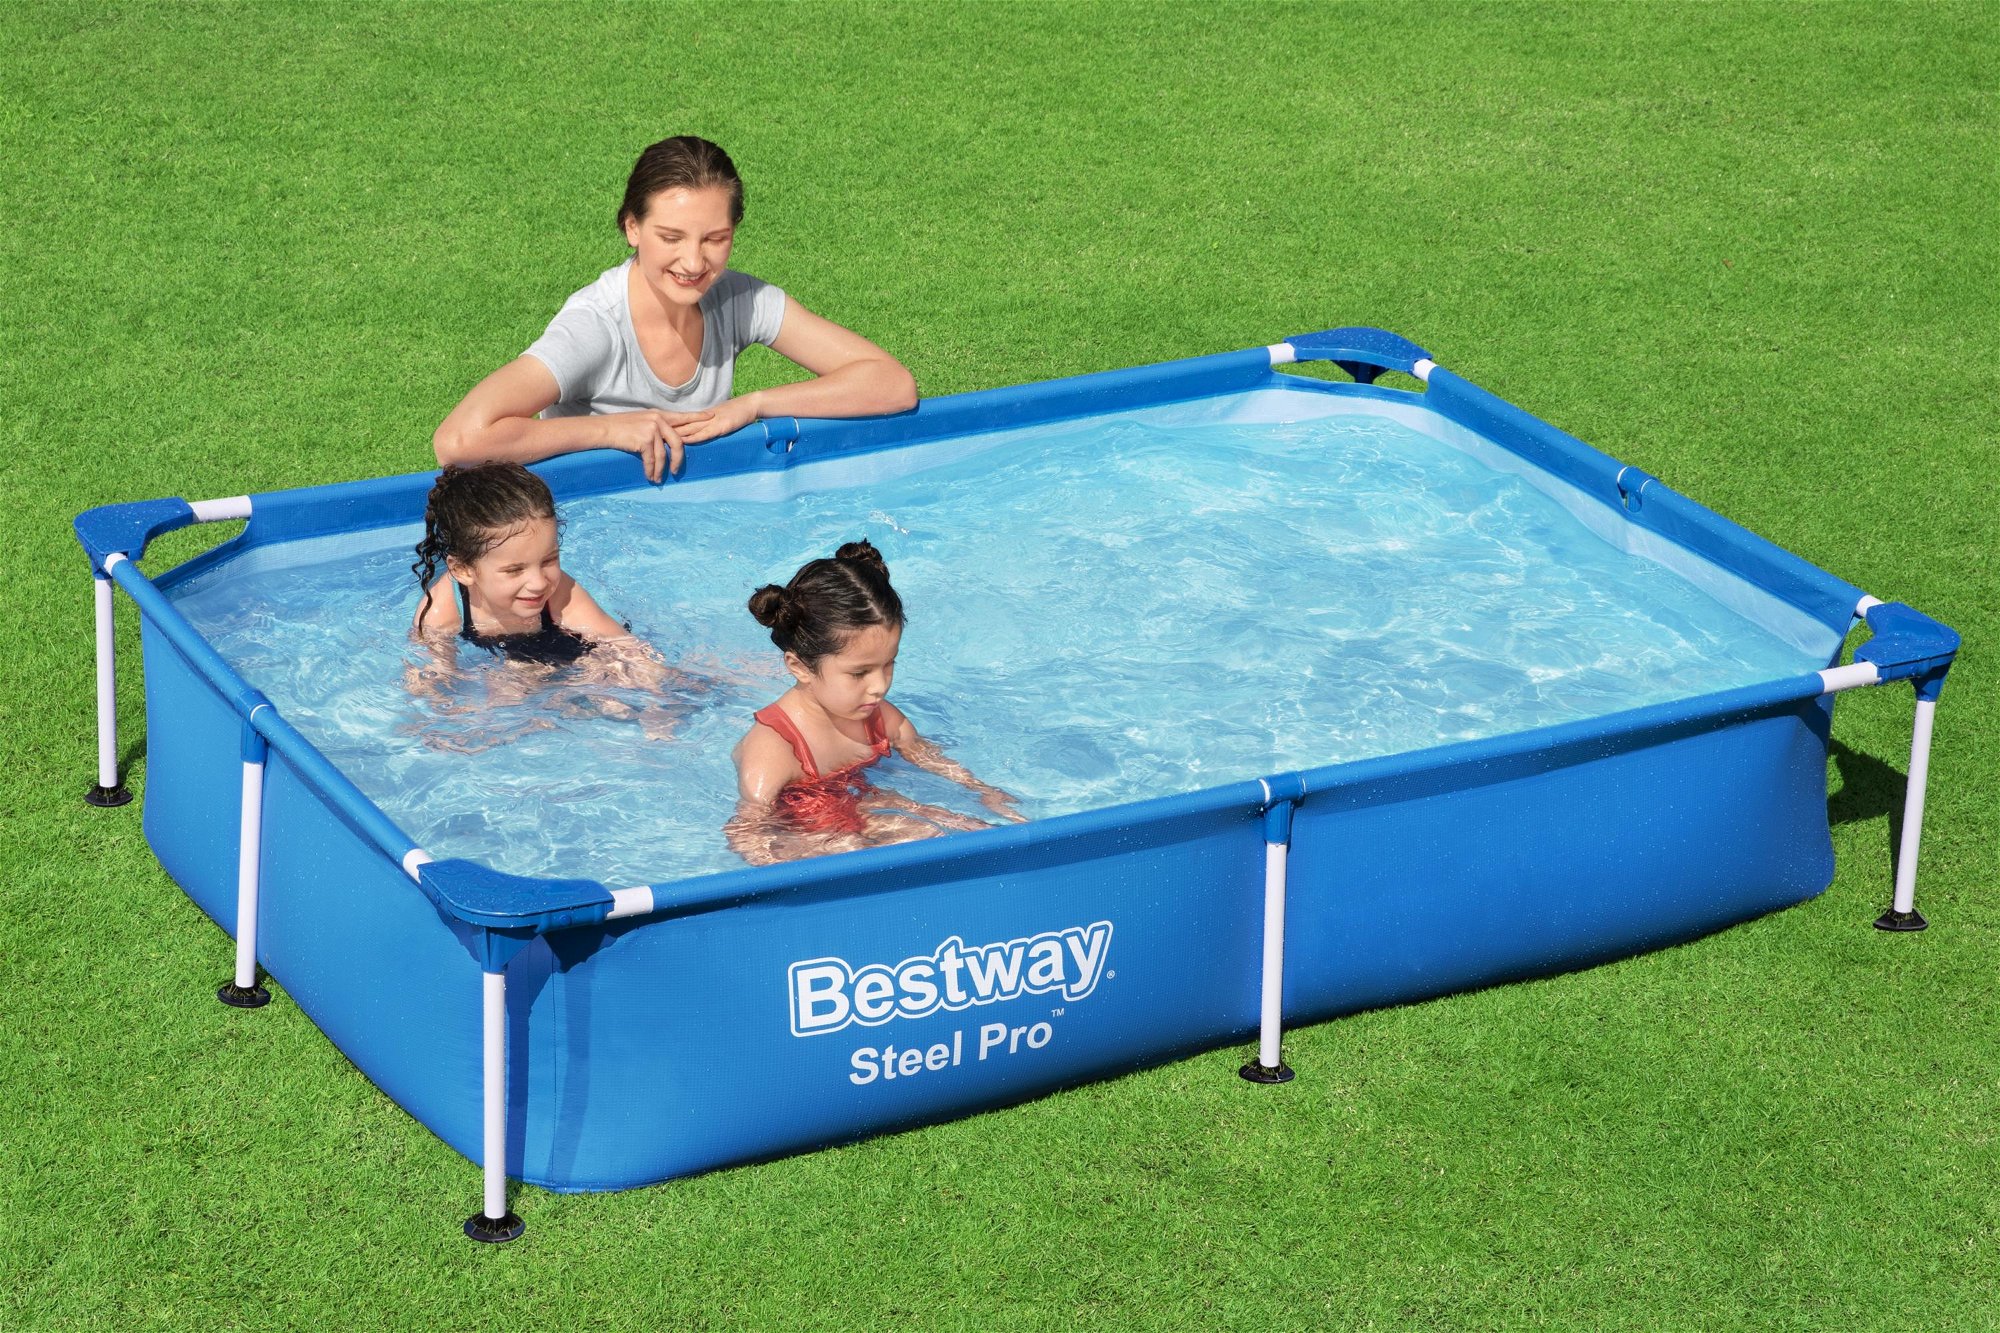 Bestway Pool Steel Pro, eckig, blau, ohne Zubehör, 221 x 150 x 43 cm SW:10010.4